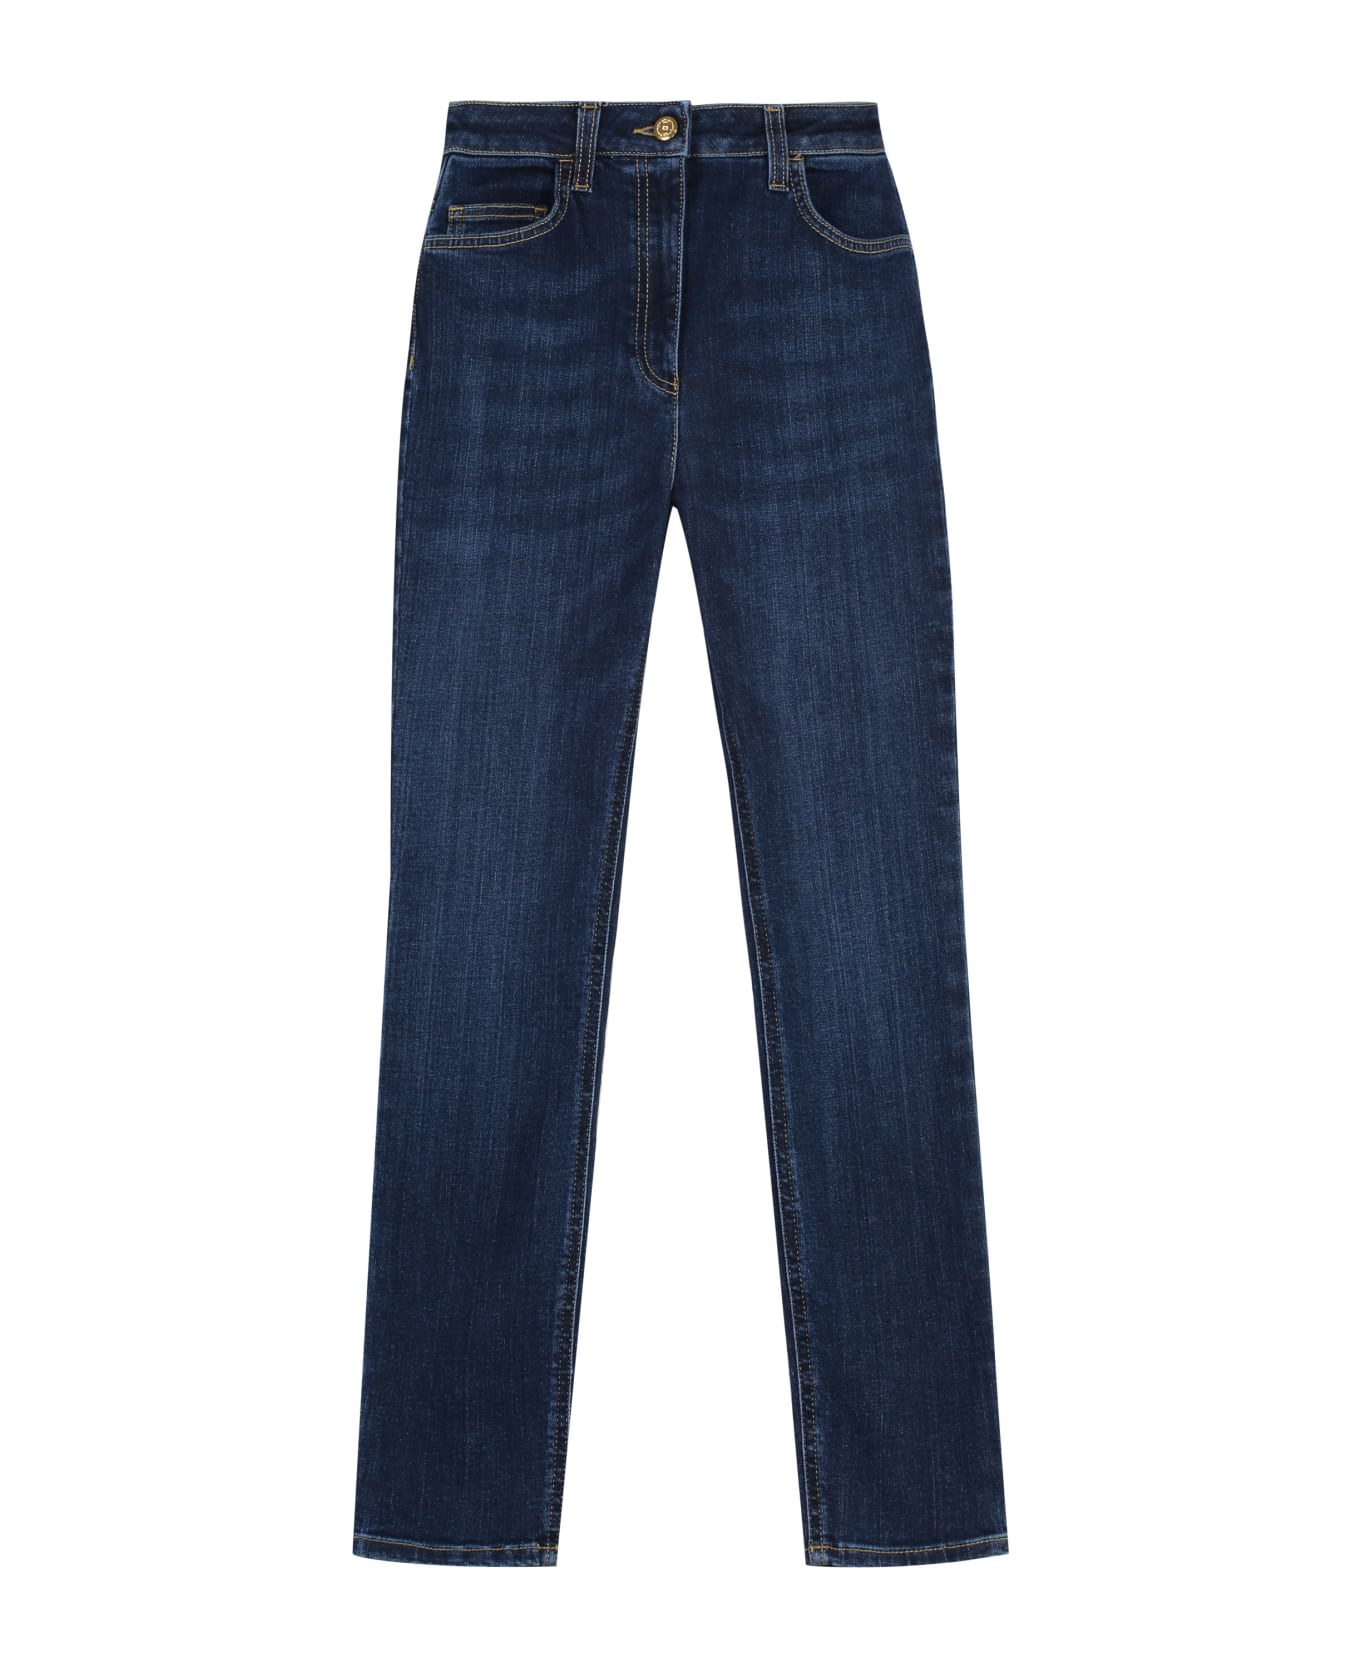 Elisabetta Franchi 5-pocket Skinny Jeans - Denim